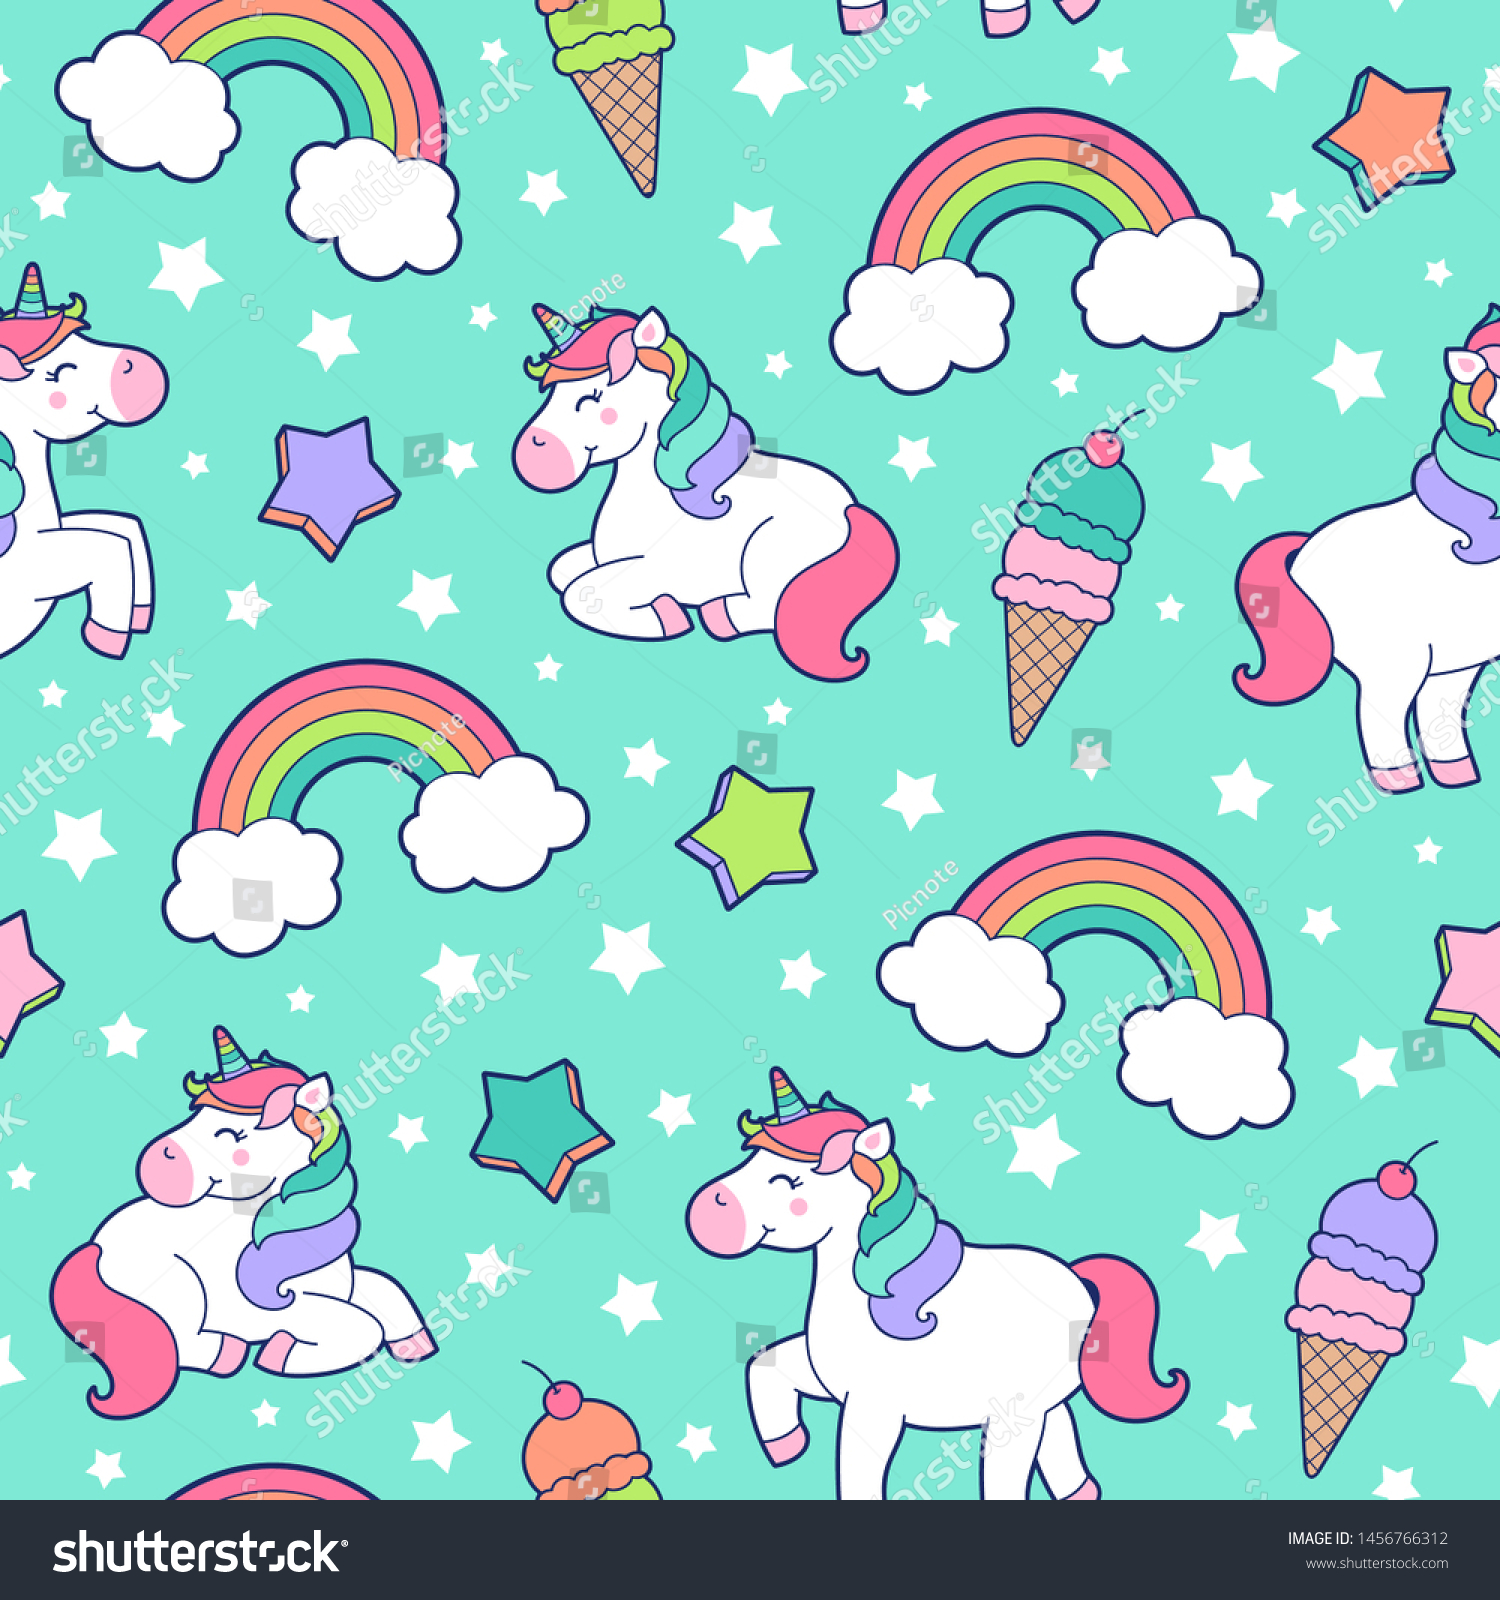 Cute Unicorn Rainbow Star Ice Cream のベクター画像素材 ロイヤリティフリー